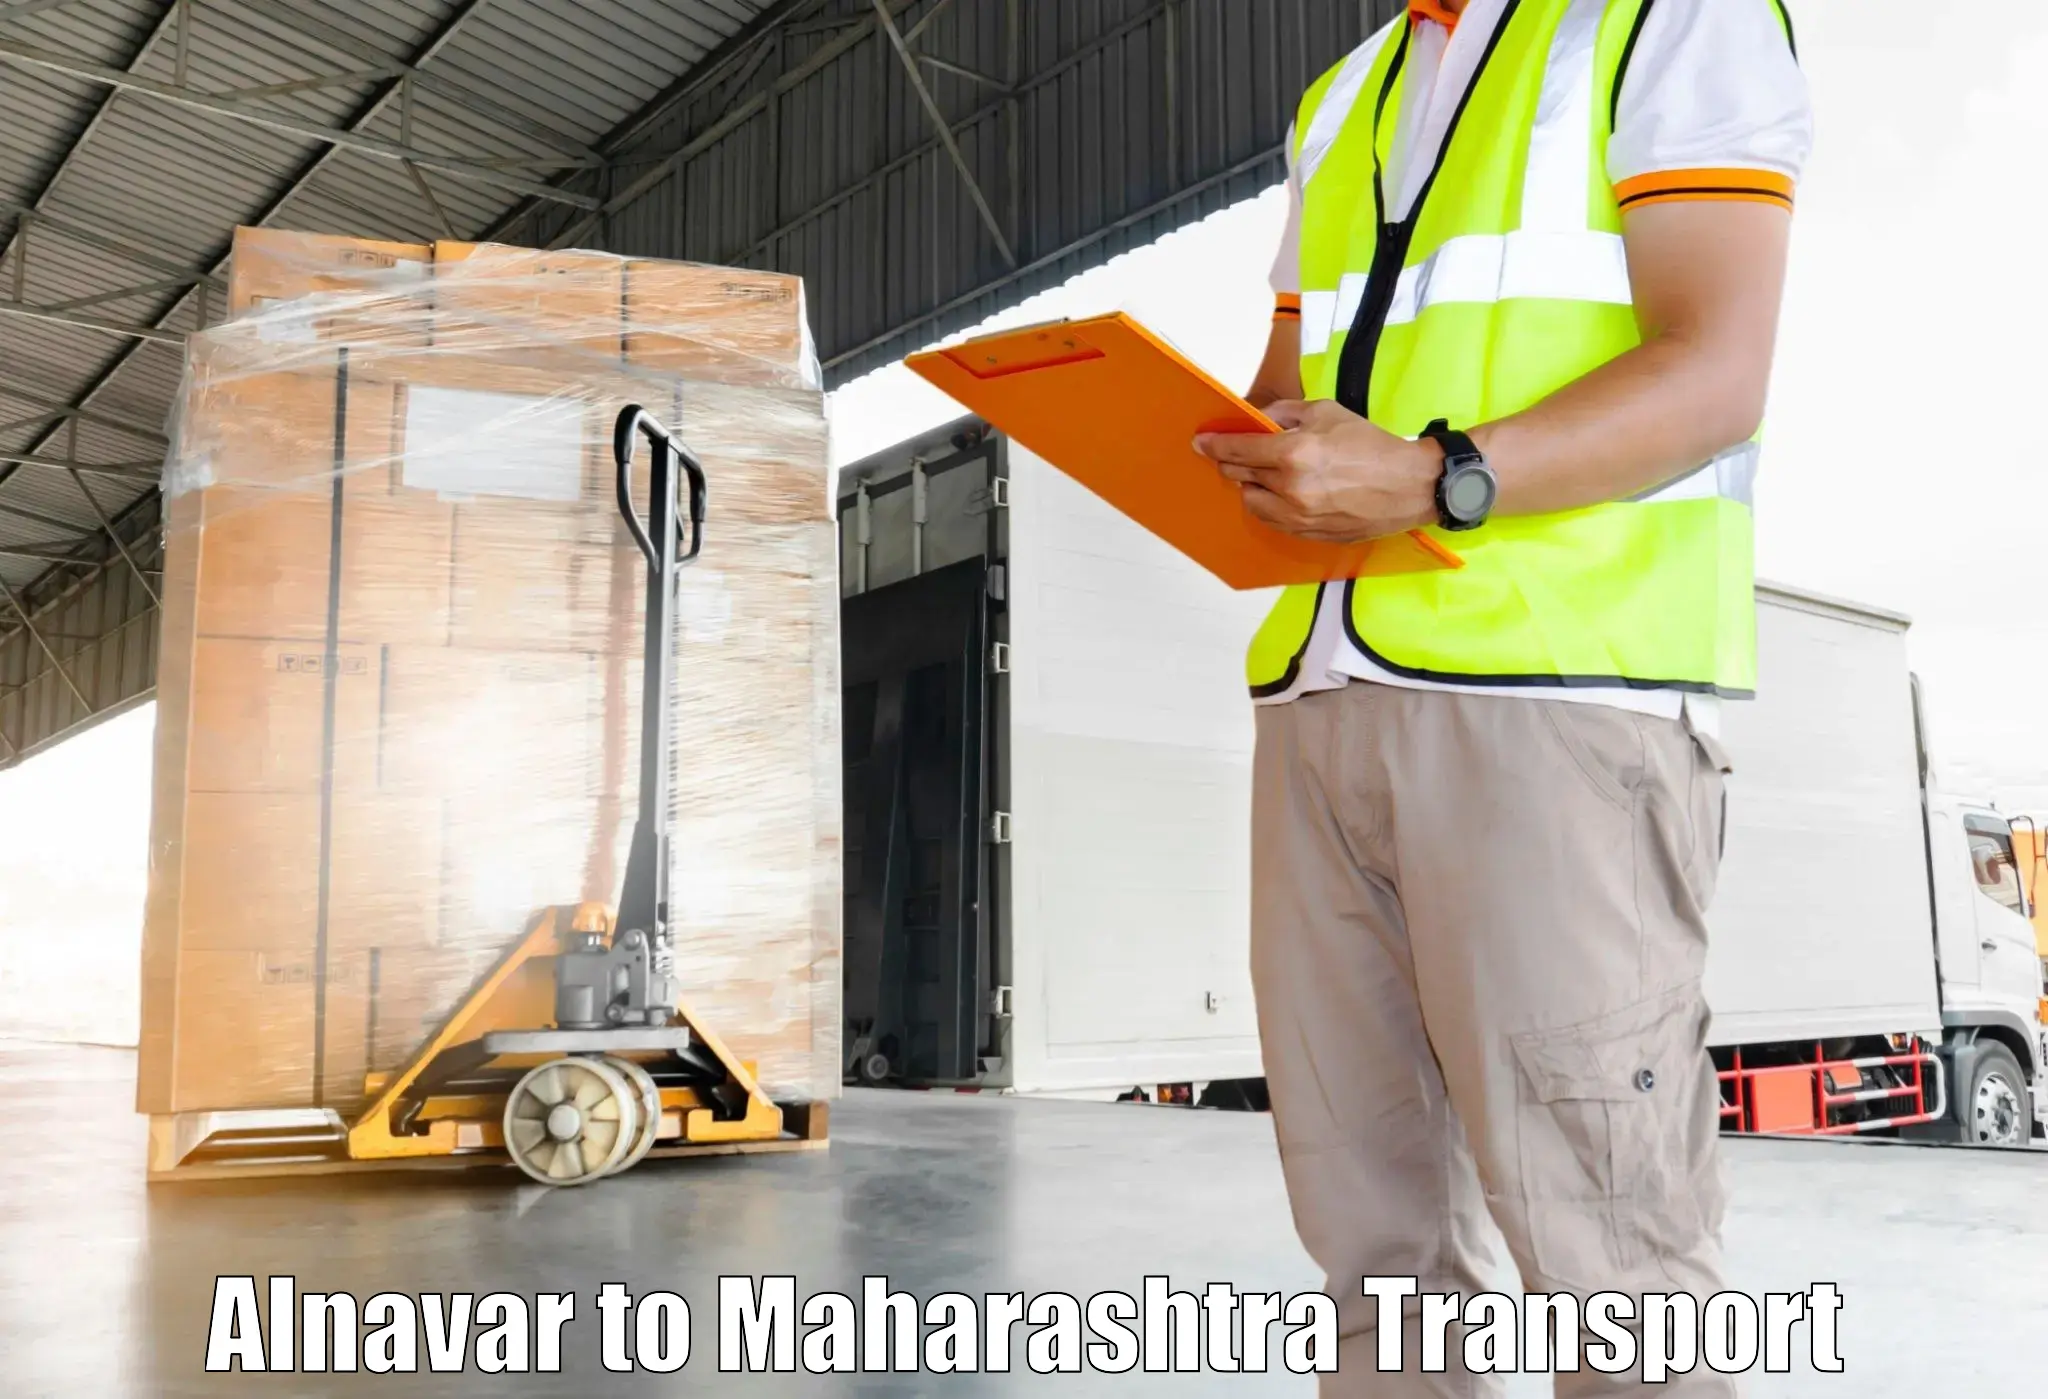 Truck transport companies in India Alnavar to Walchandnagar